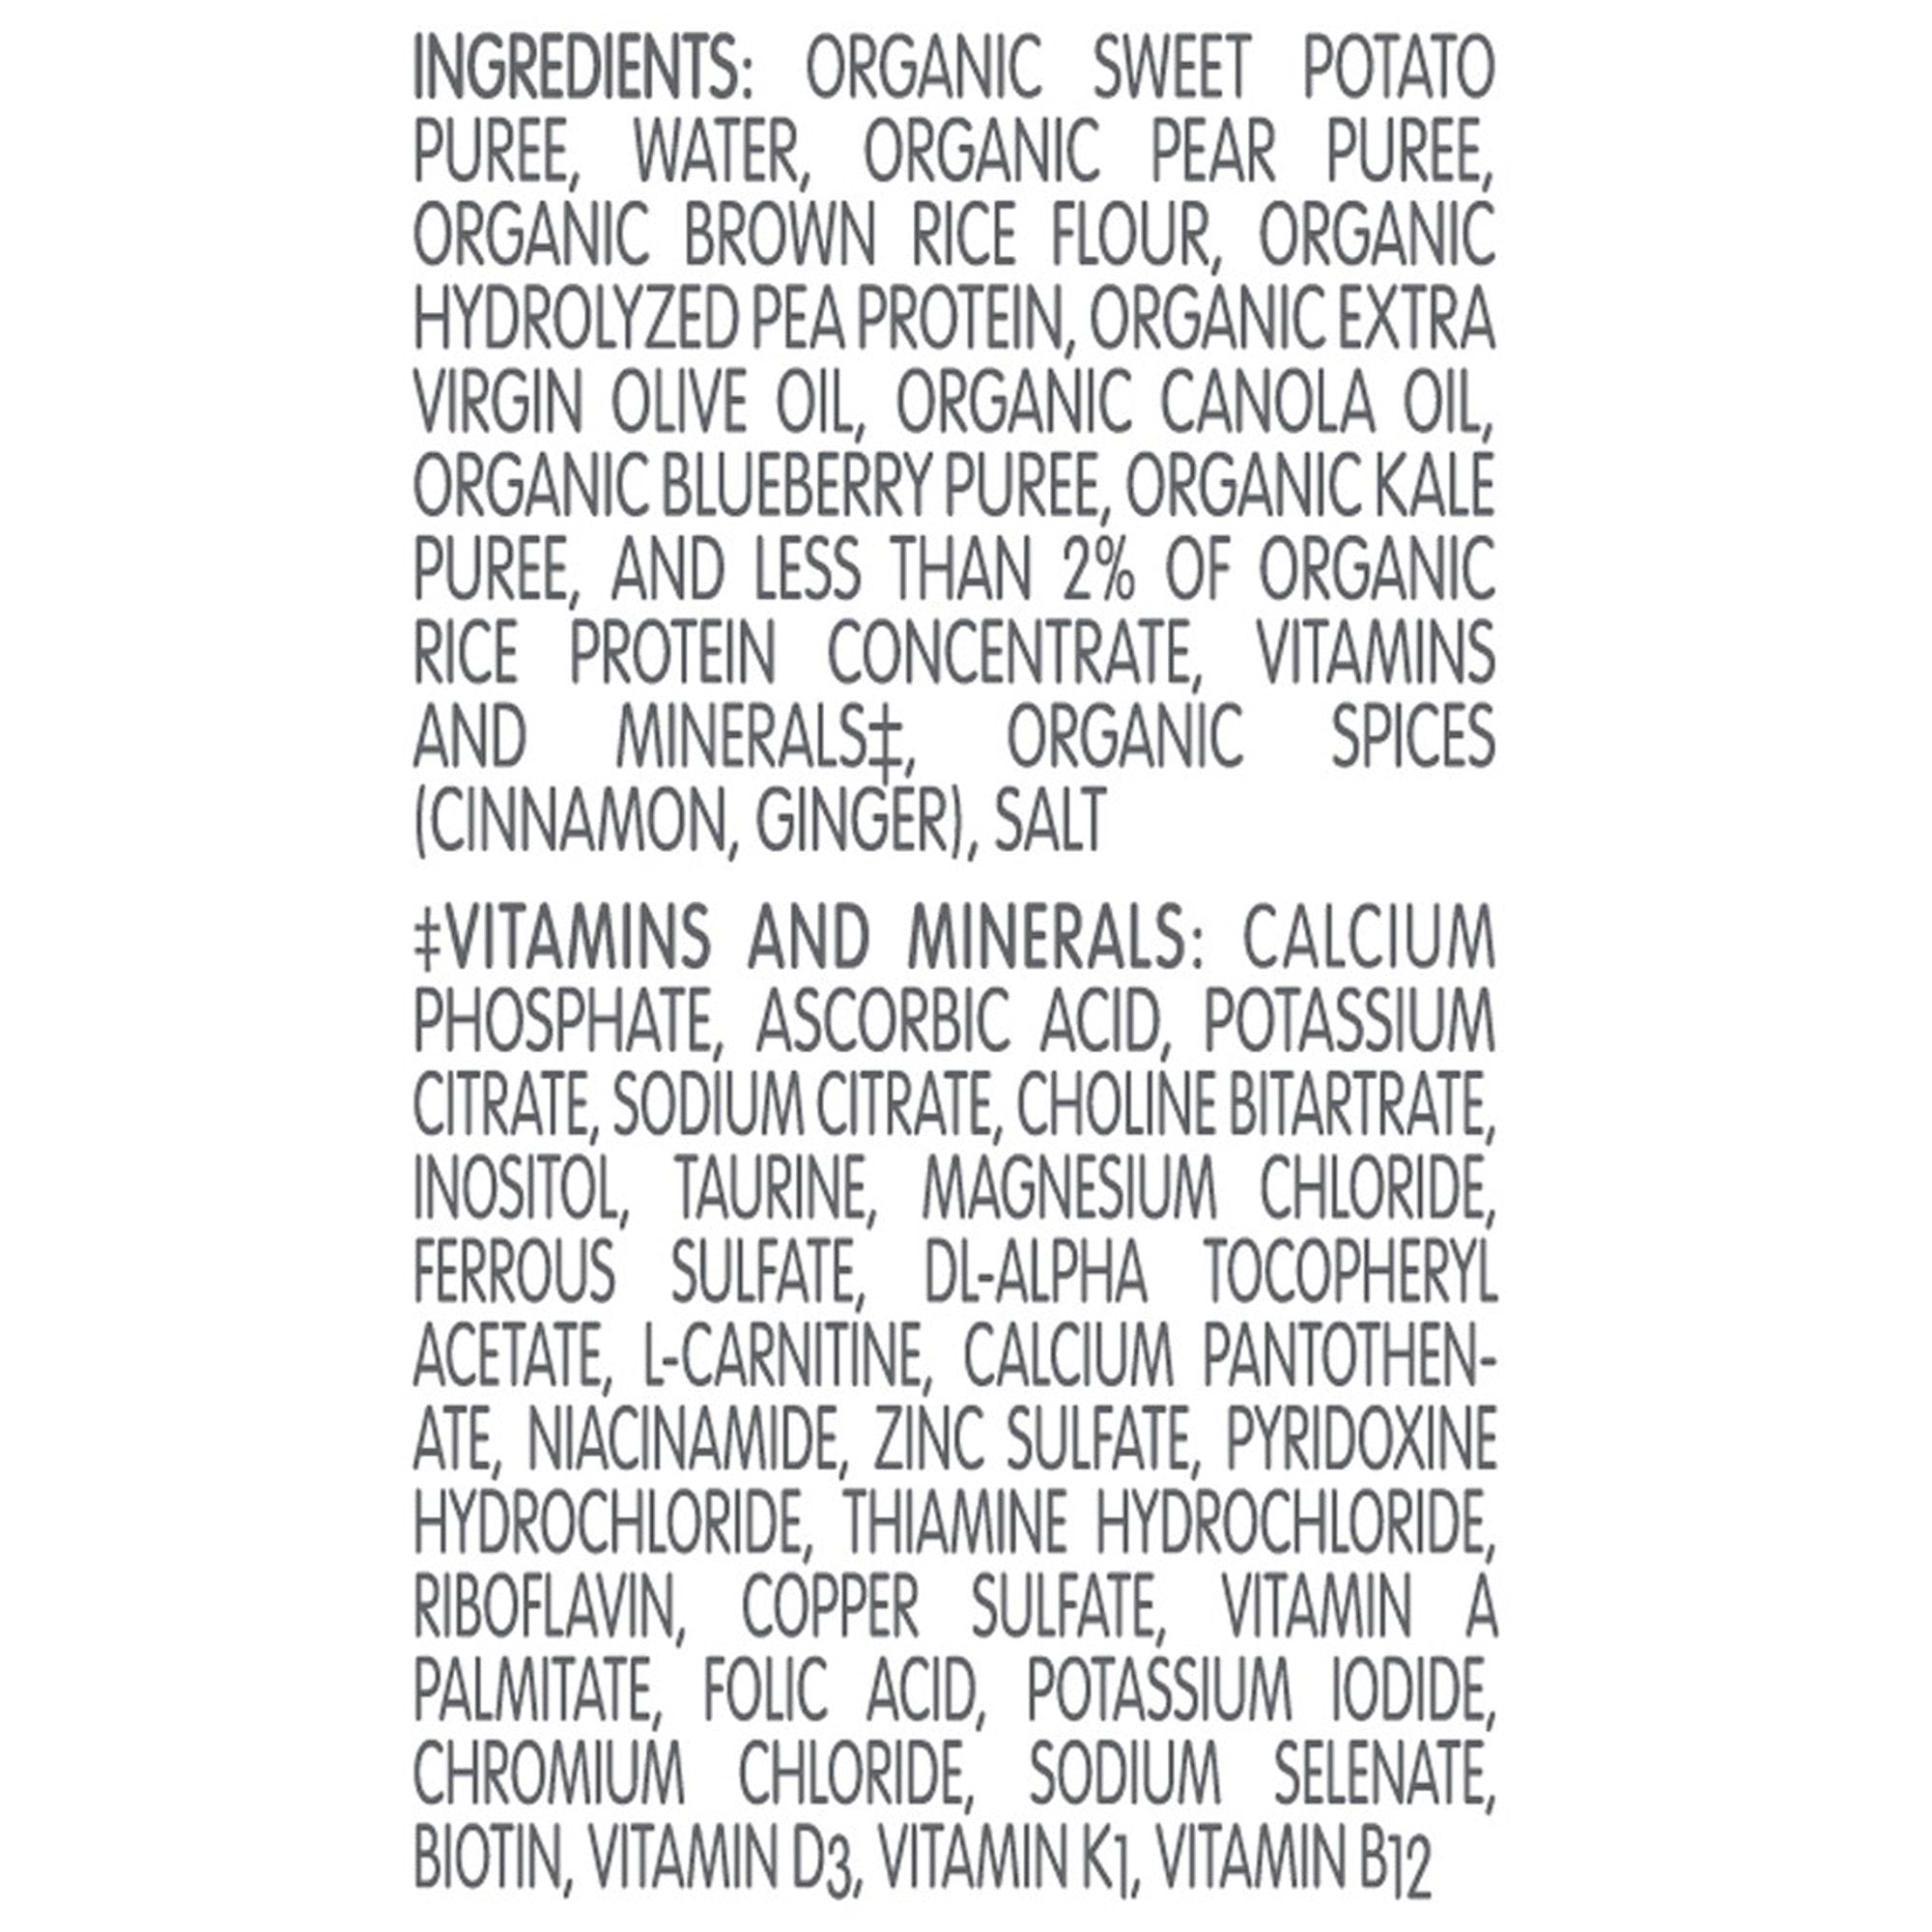 Pediatric Oral Supplement Compleat Pediatric Organic Blends 10.1 oz. Pouch Liquid Organic Food Allergies